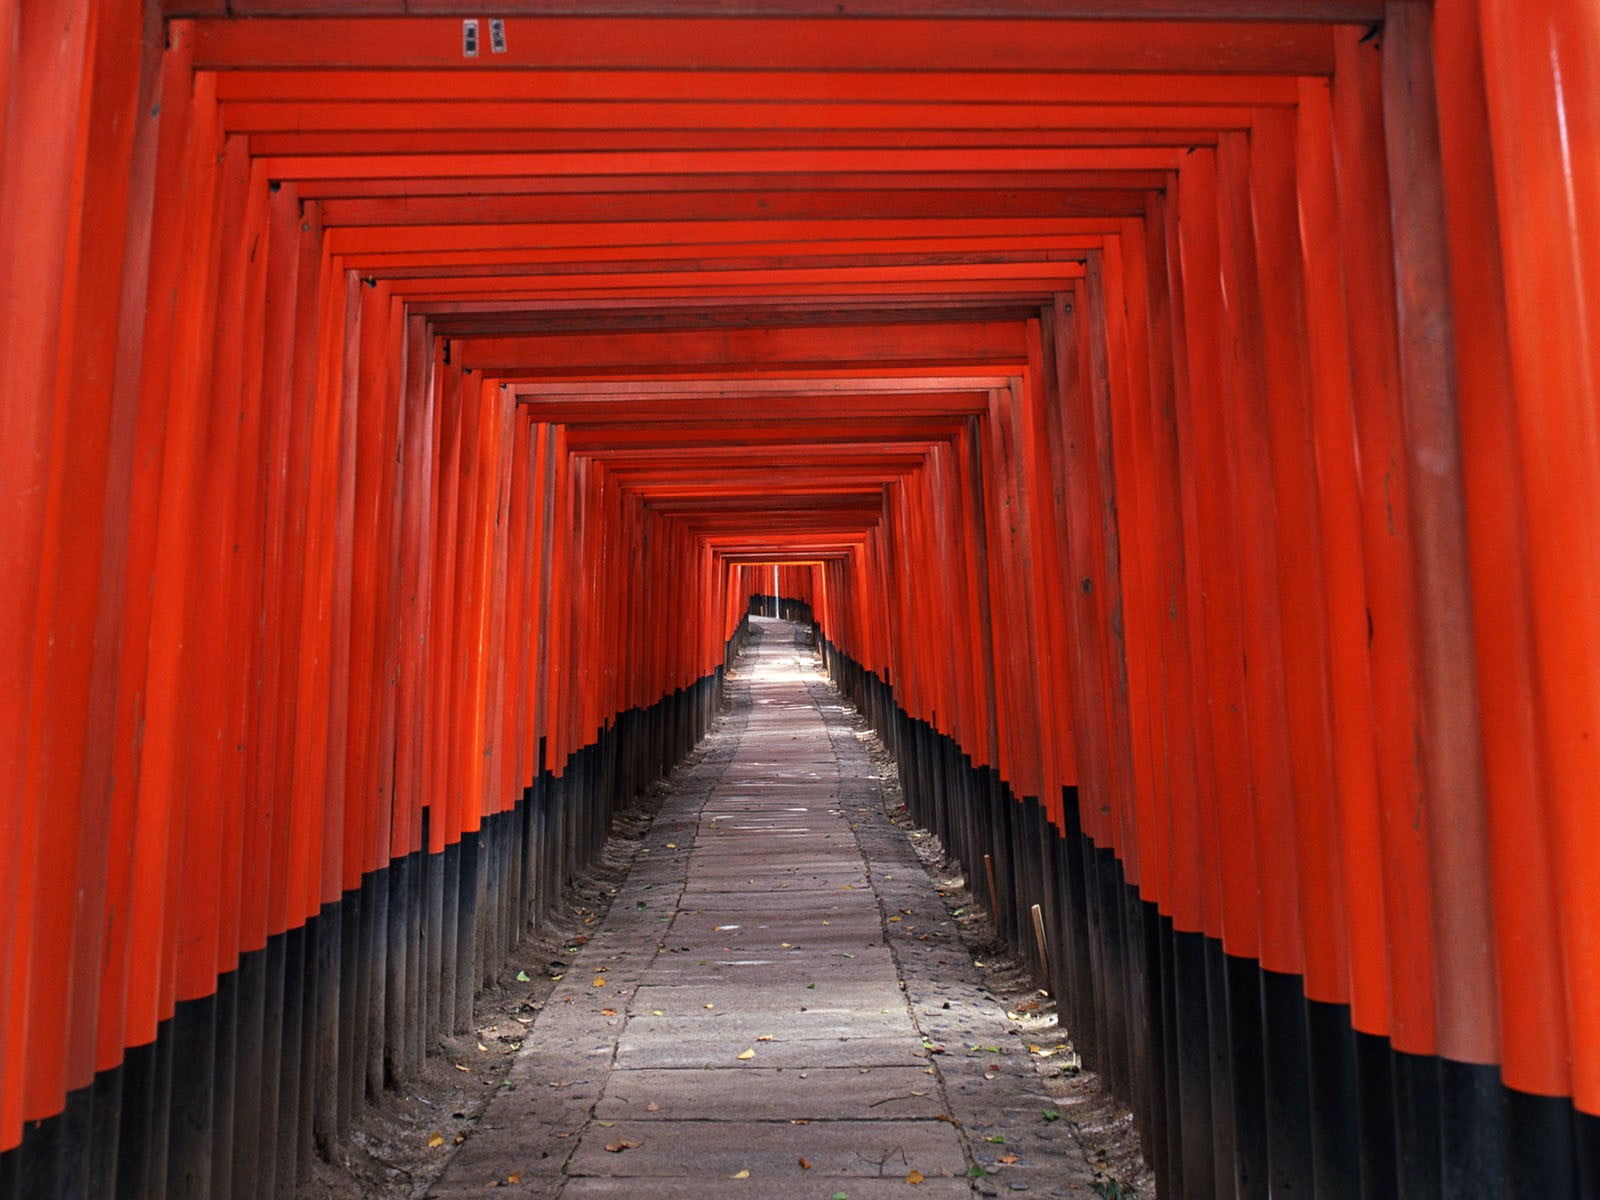 Torii gate, Red, Japan, Corridor, architecture, asia, cultures